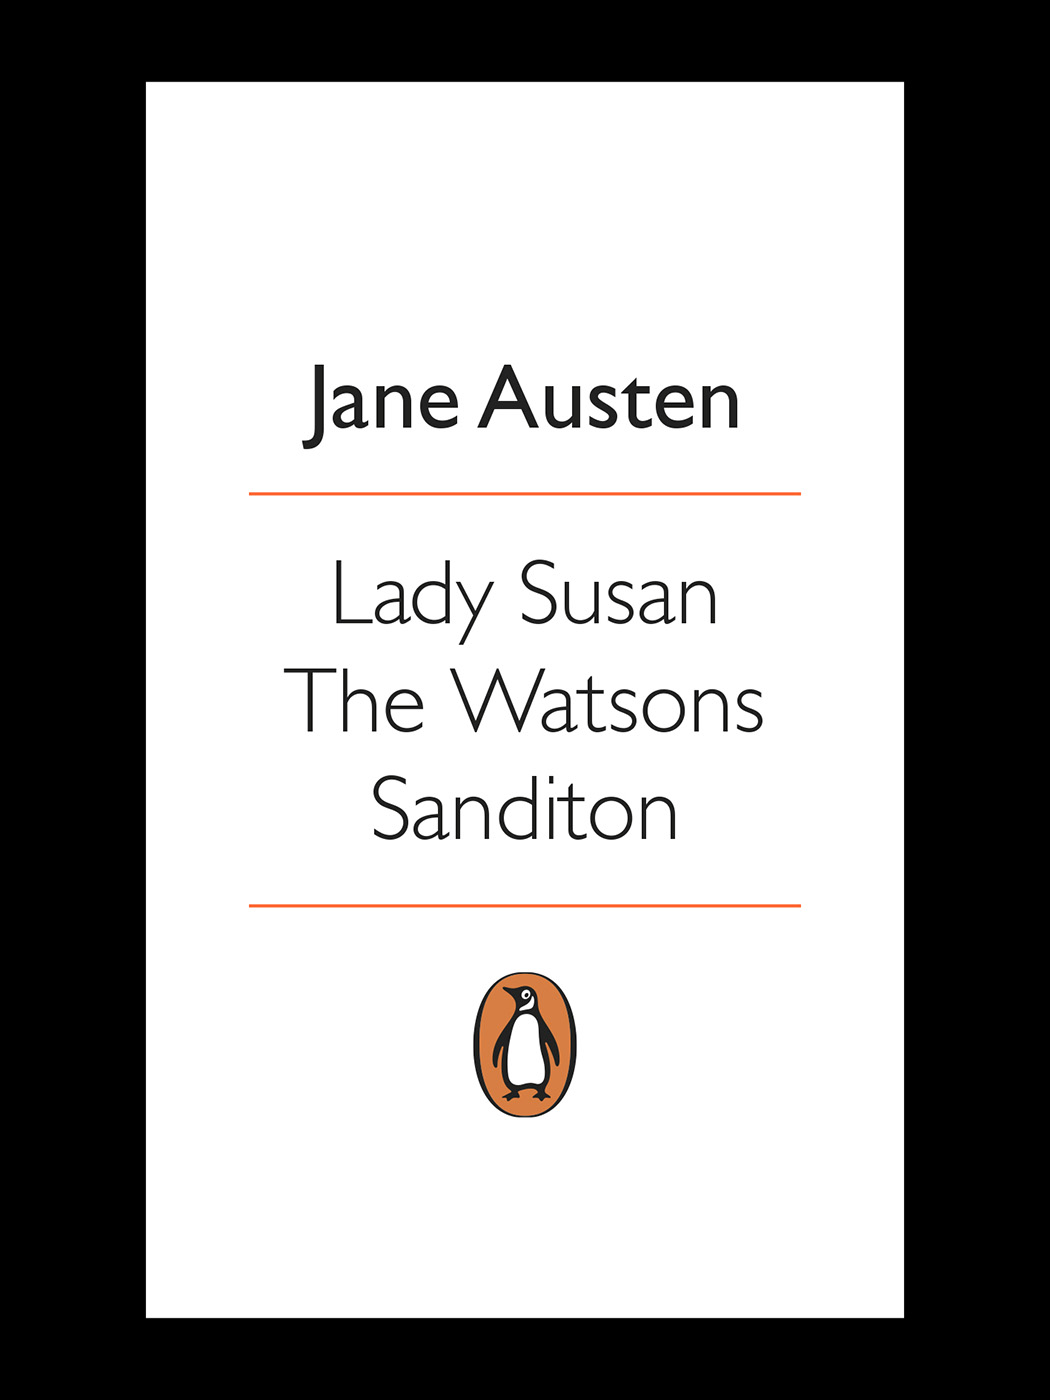 Lady Susan, the Watsons, Sanditon